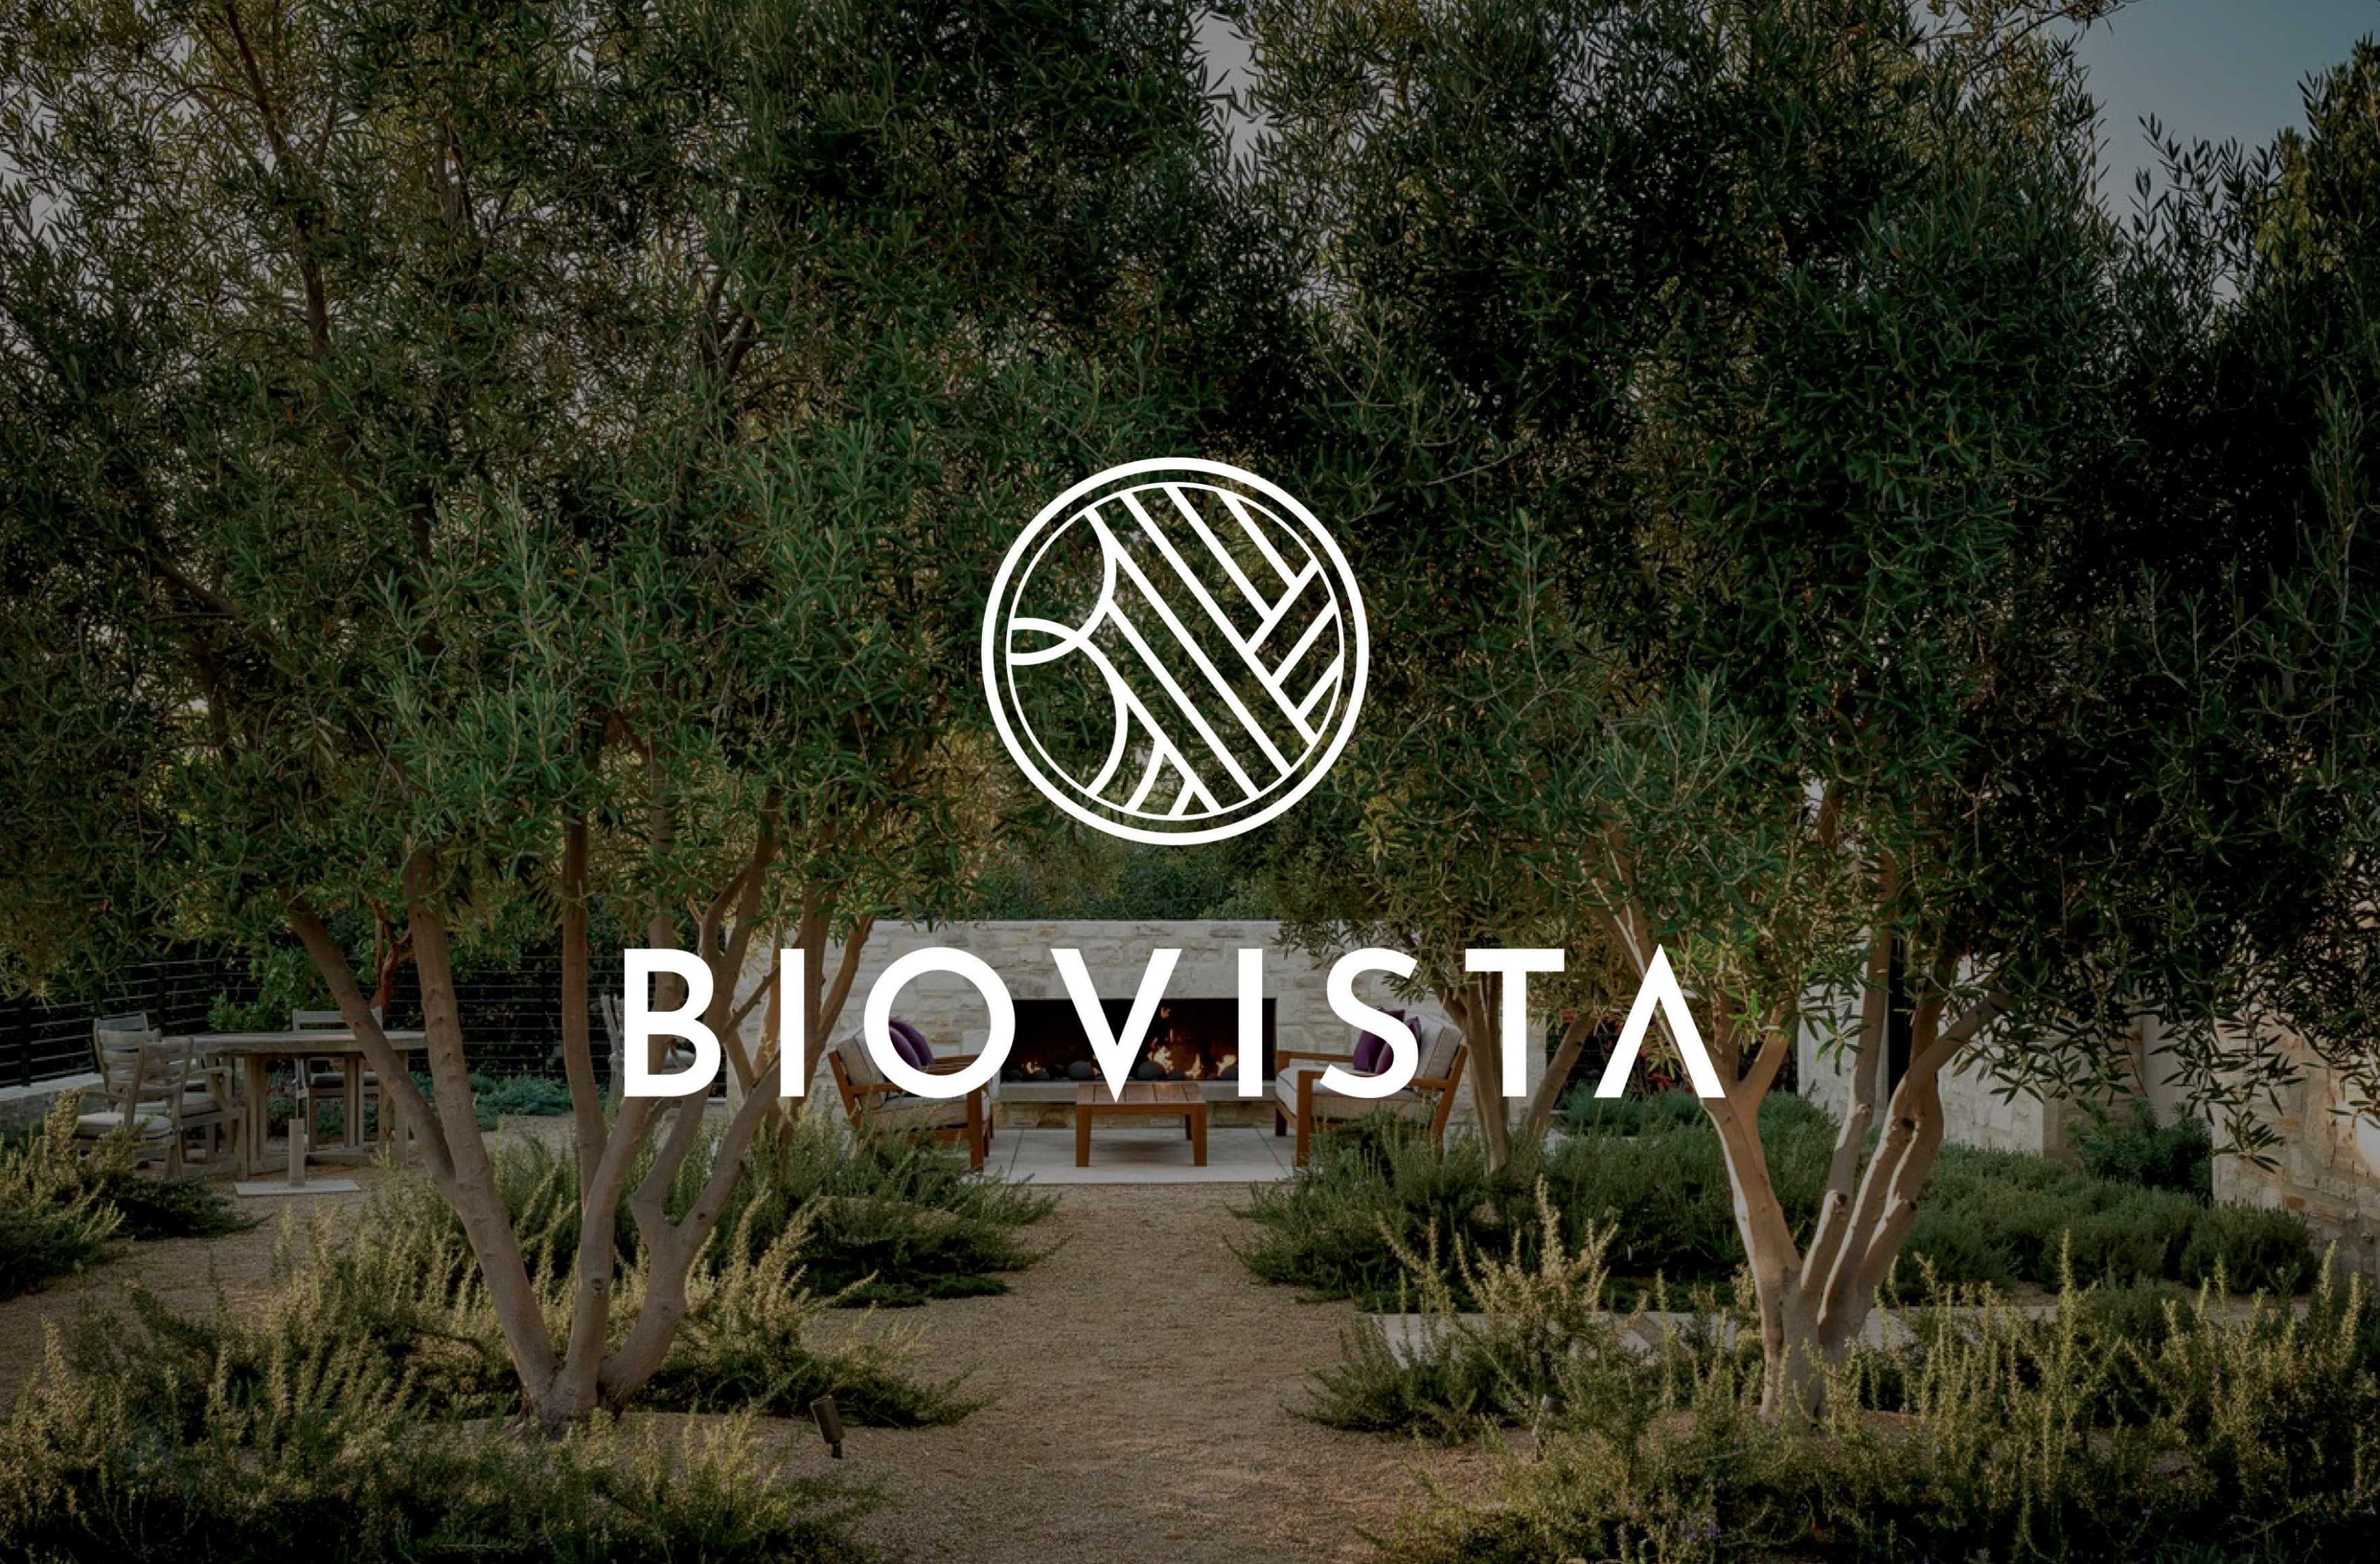 Image of the Biovista outside plaza with the Biovista logo and mark. 